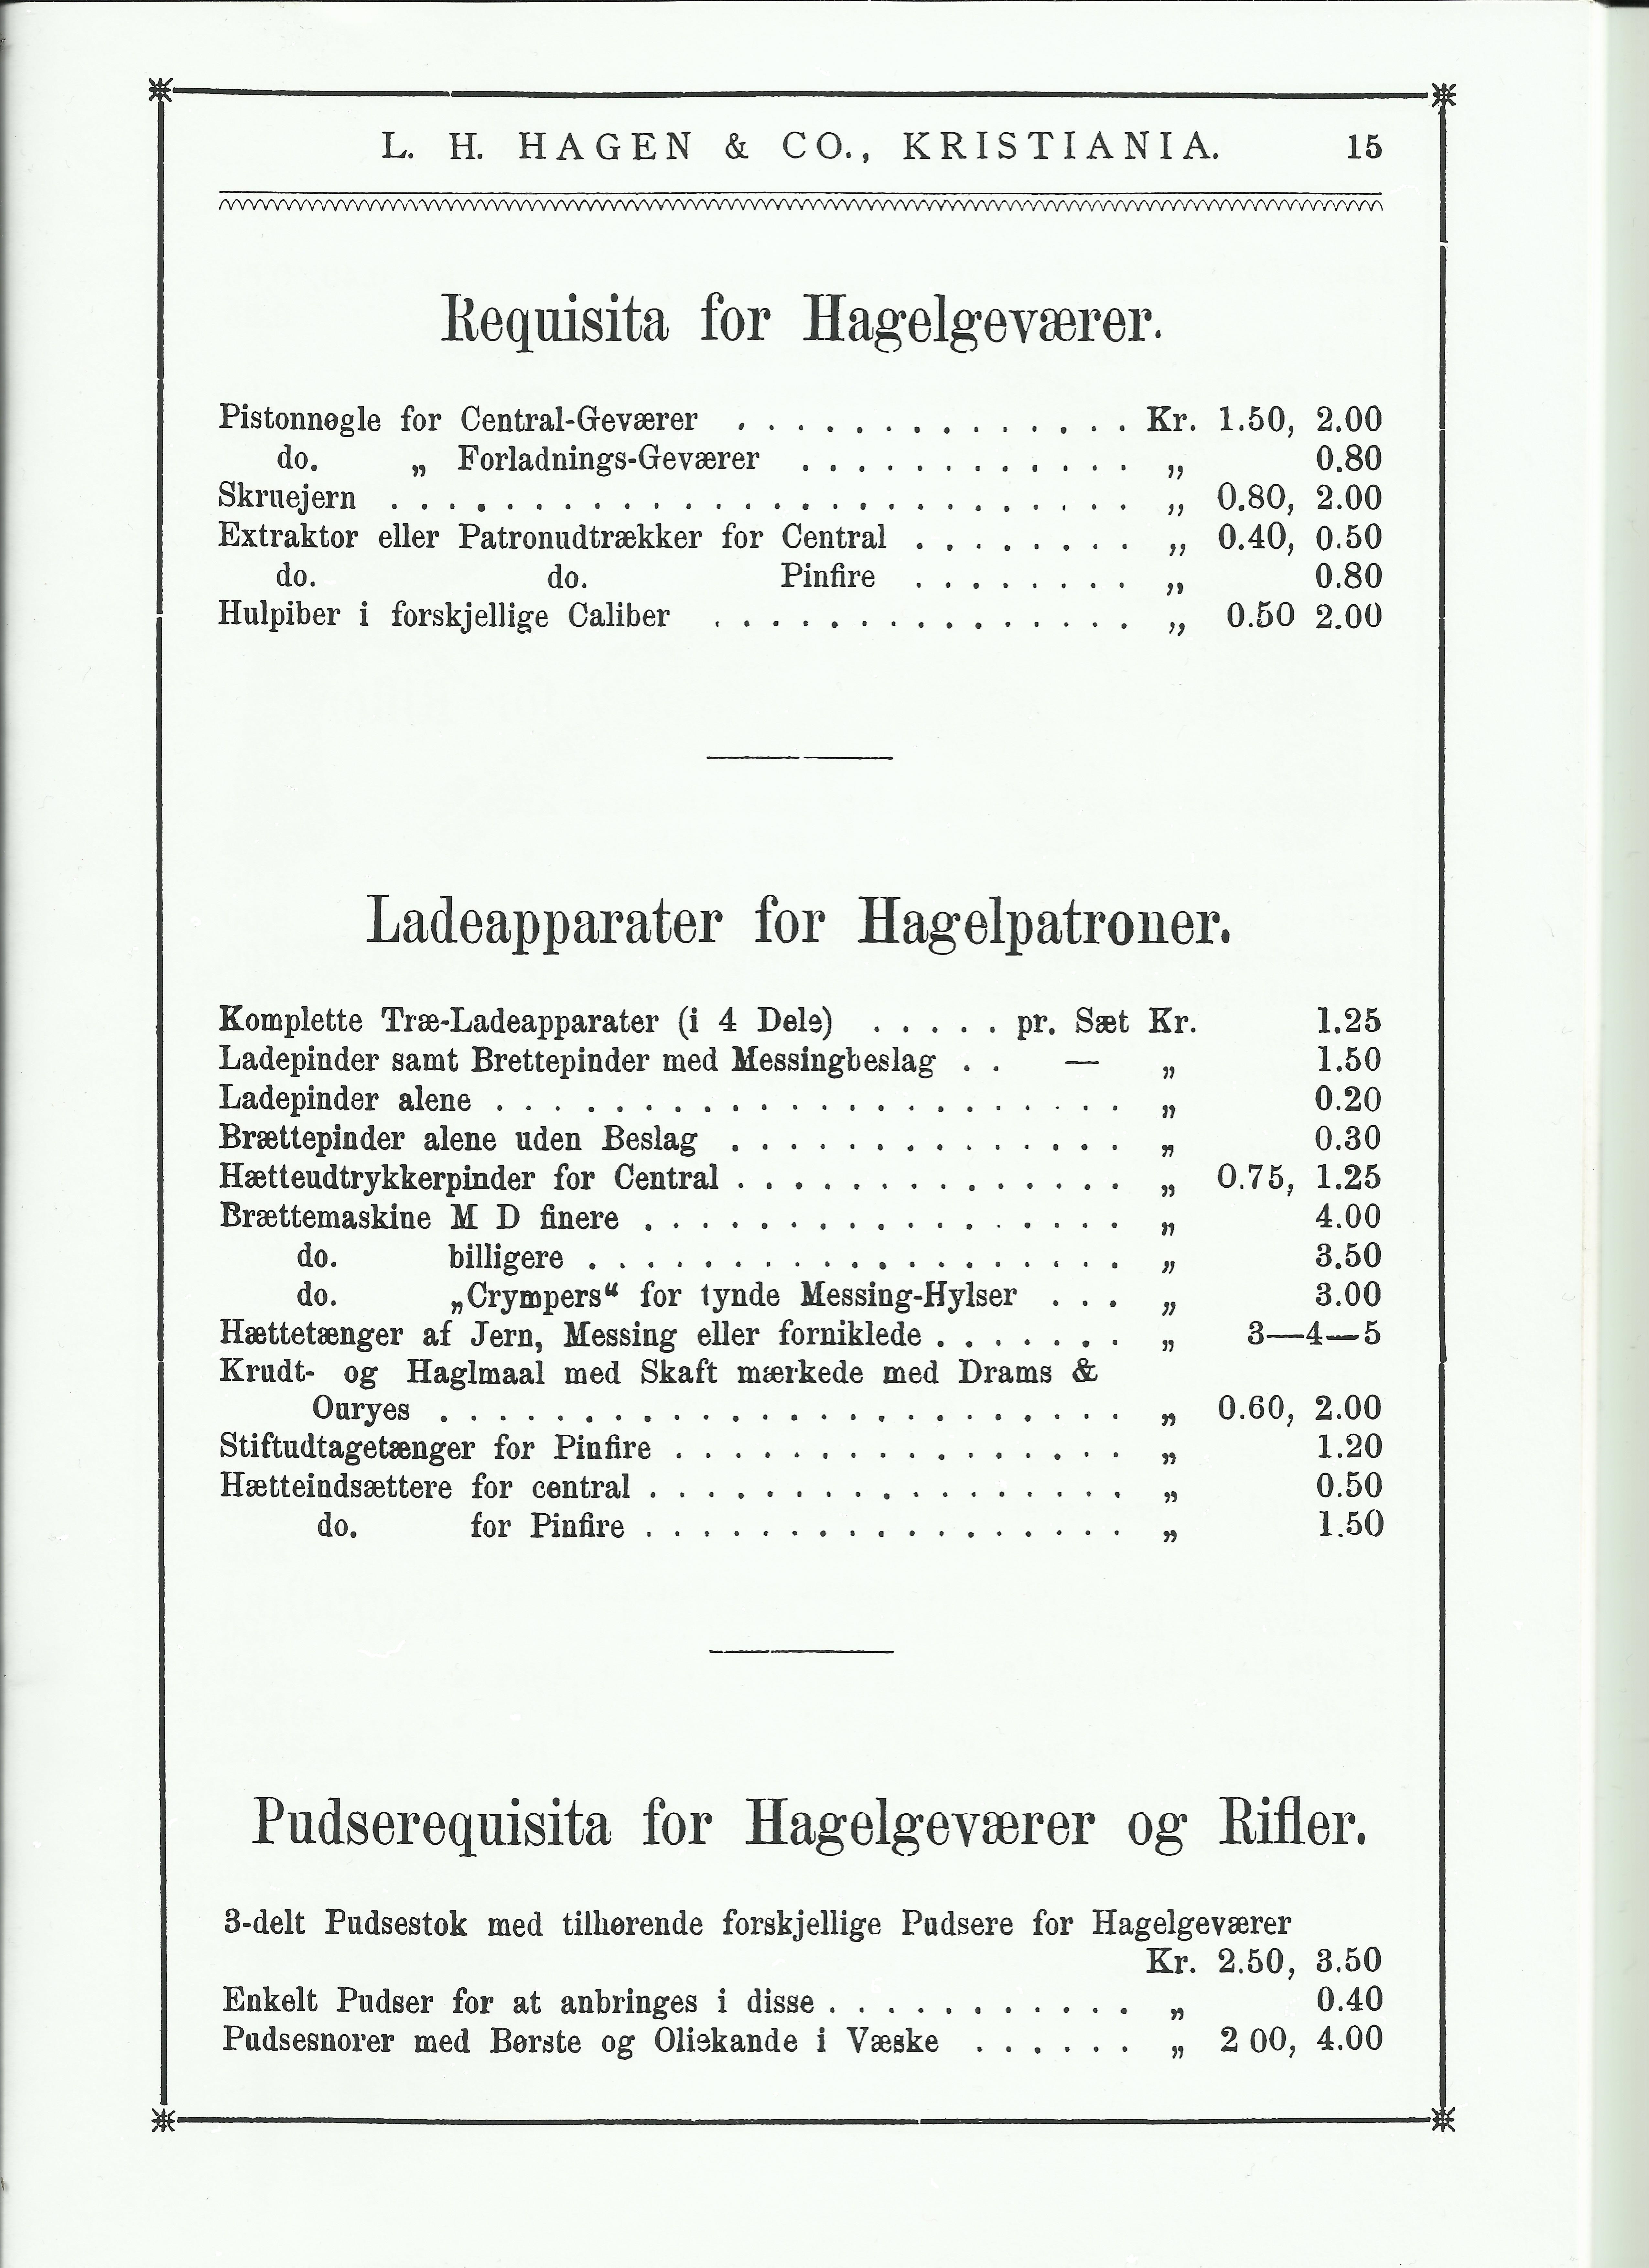 ./doc/diverse/Katalog-Hagen-189x-Side-15.jpg